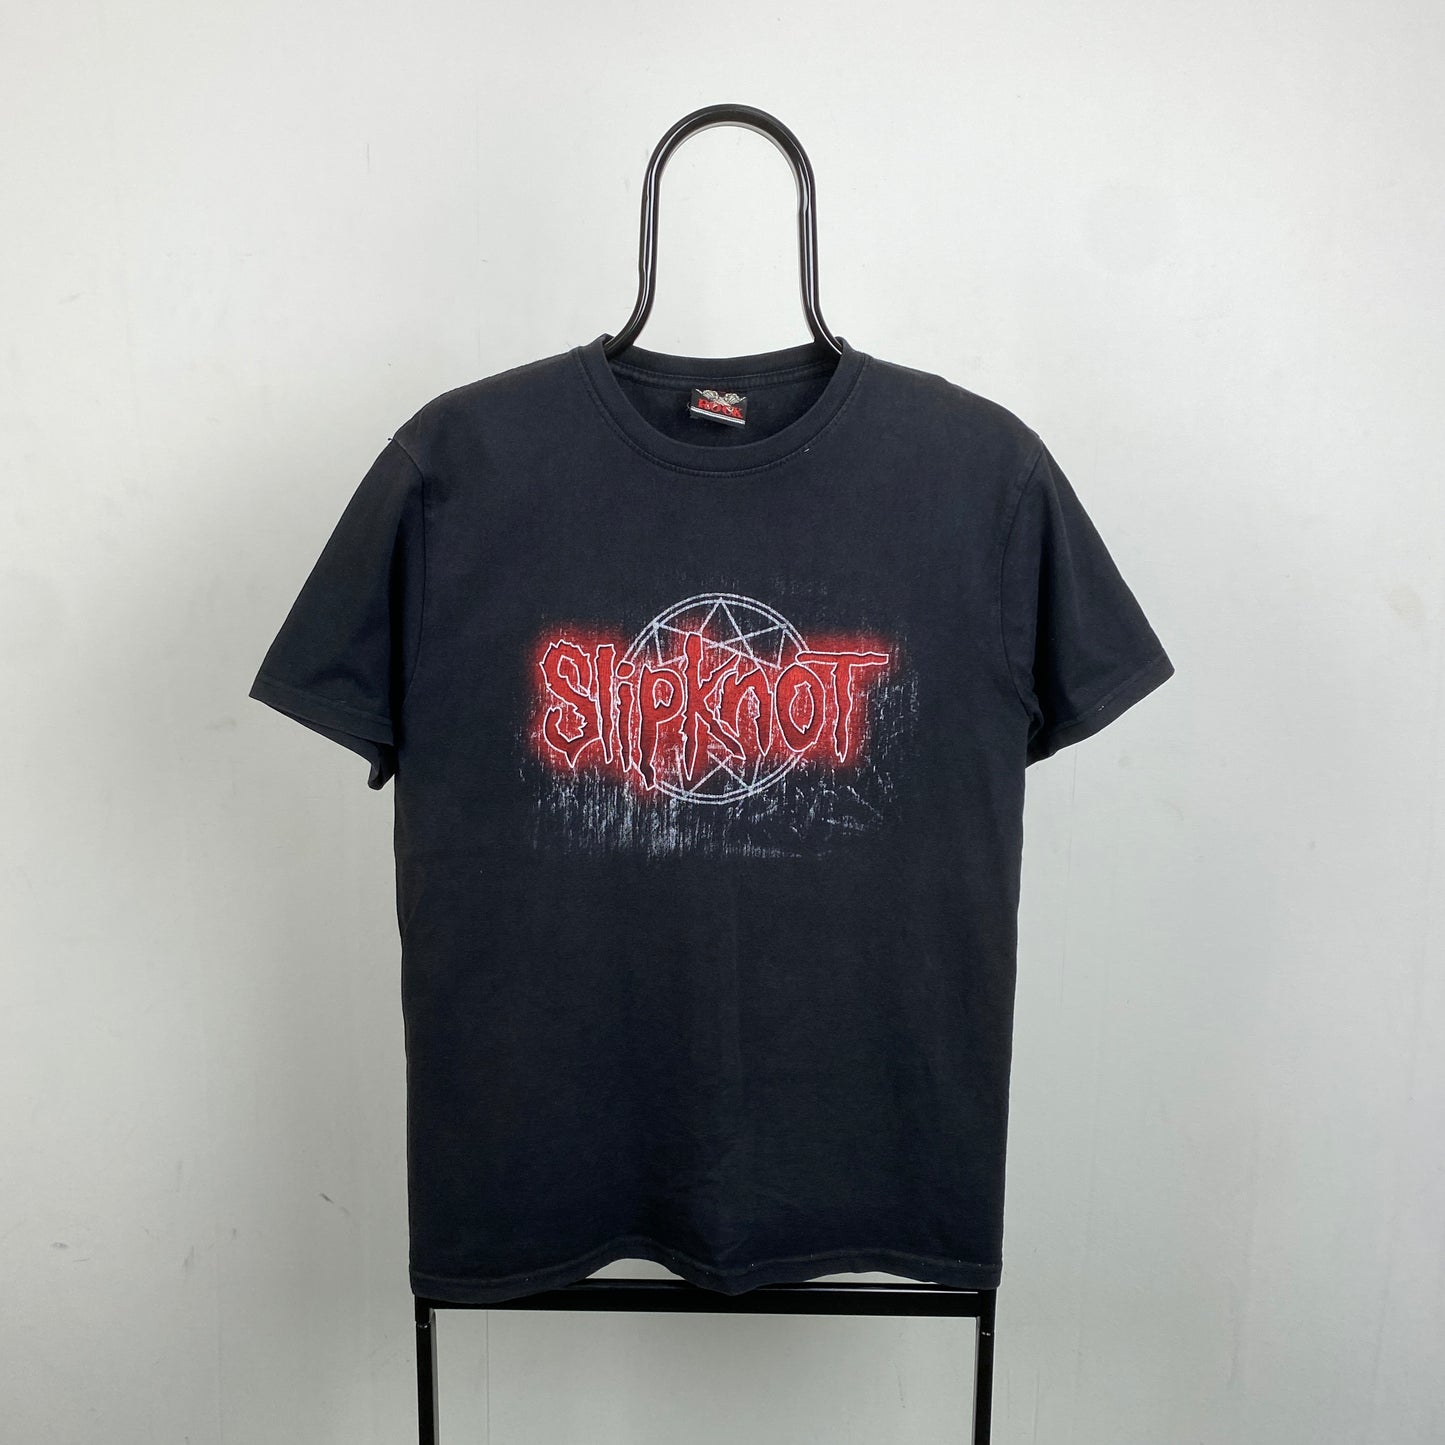 Retro 90s Slipknot T-Shirt Black Medium